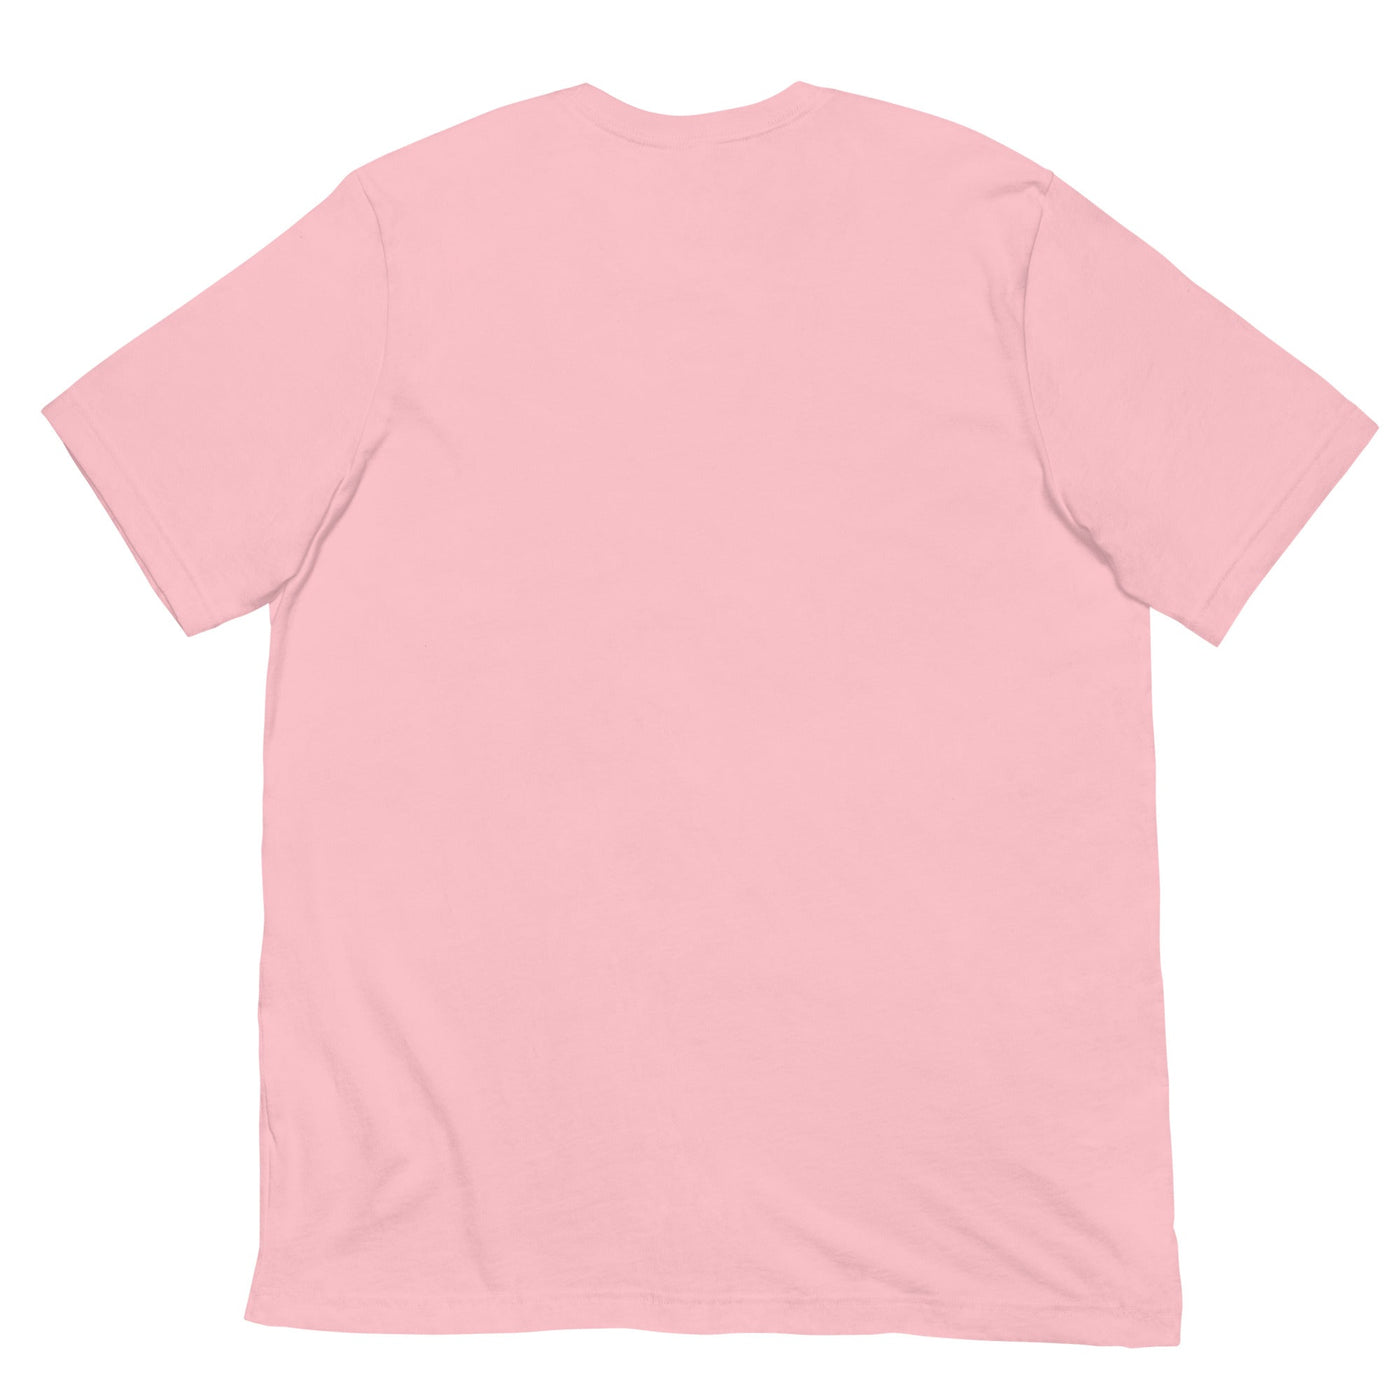 Possum Kingdom Lake + Get Your Own Dam Shirt, T-Shirt - Ezra's Clothing